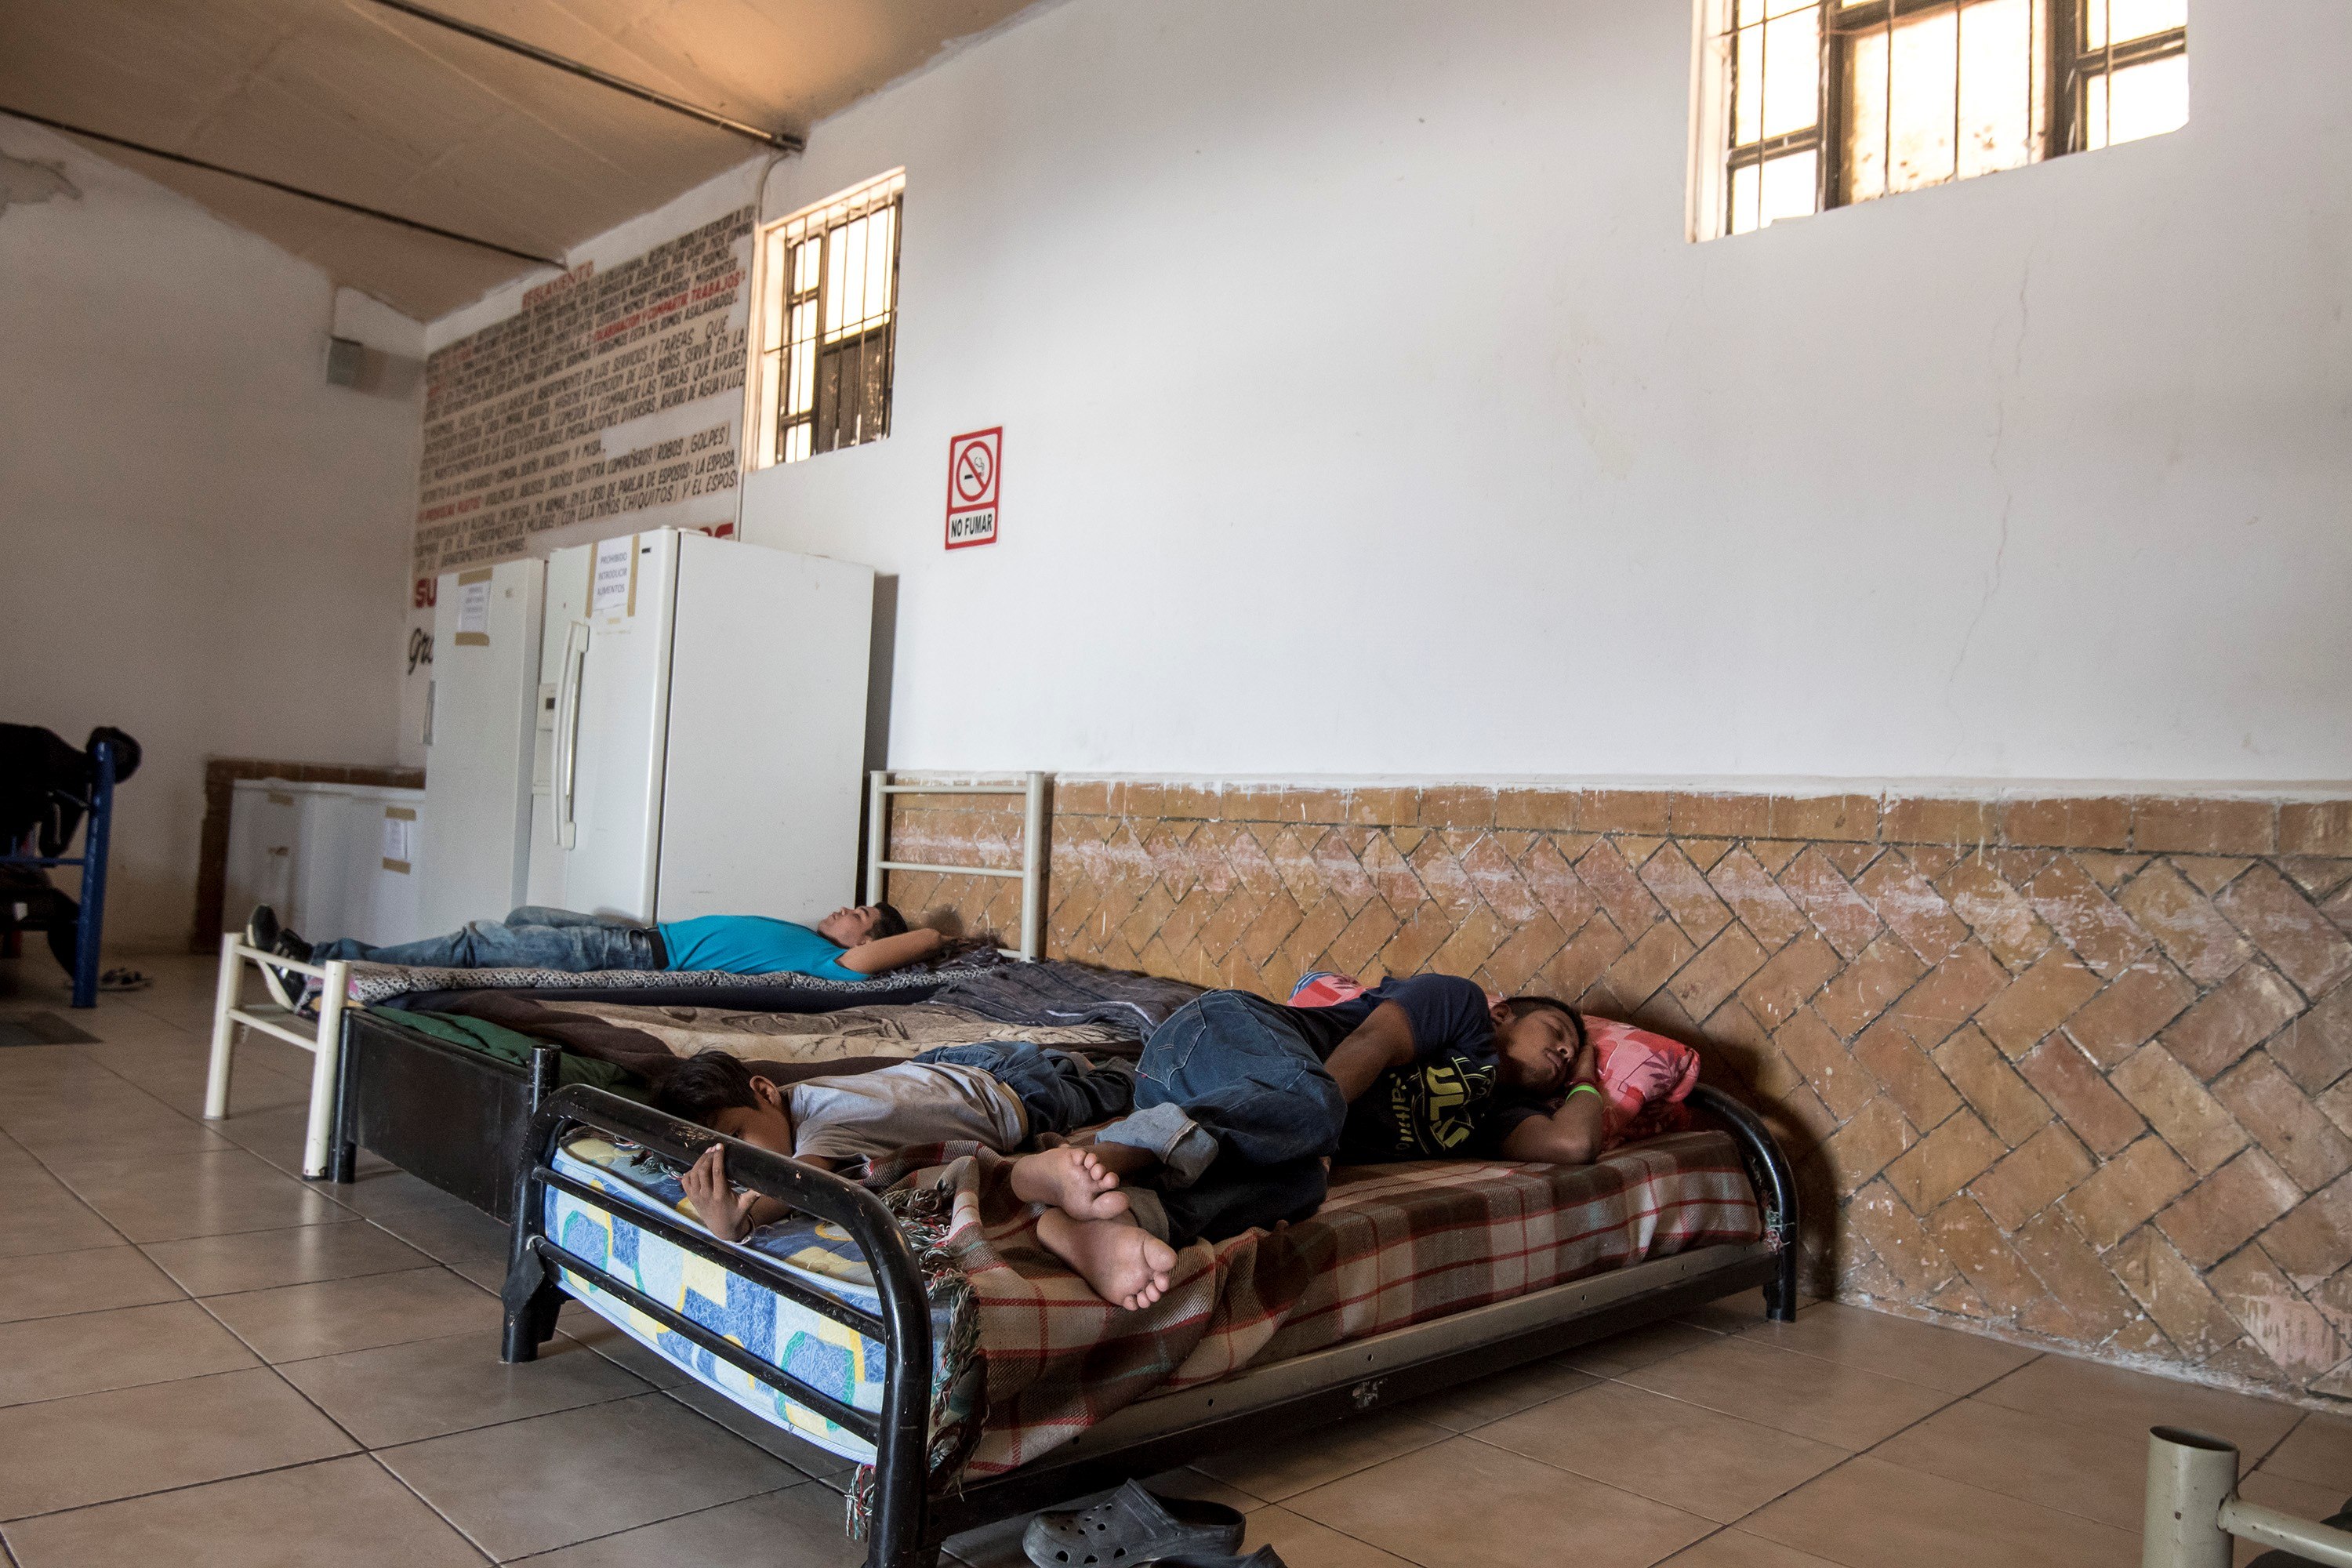  Muerte de centroamericano en Saltillo exhibe deterioro de trato a migrantes: AI